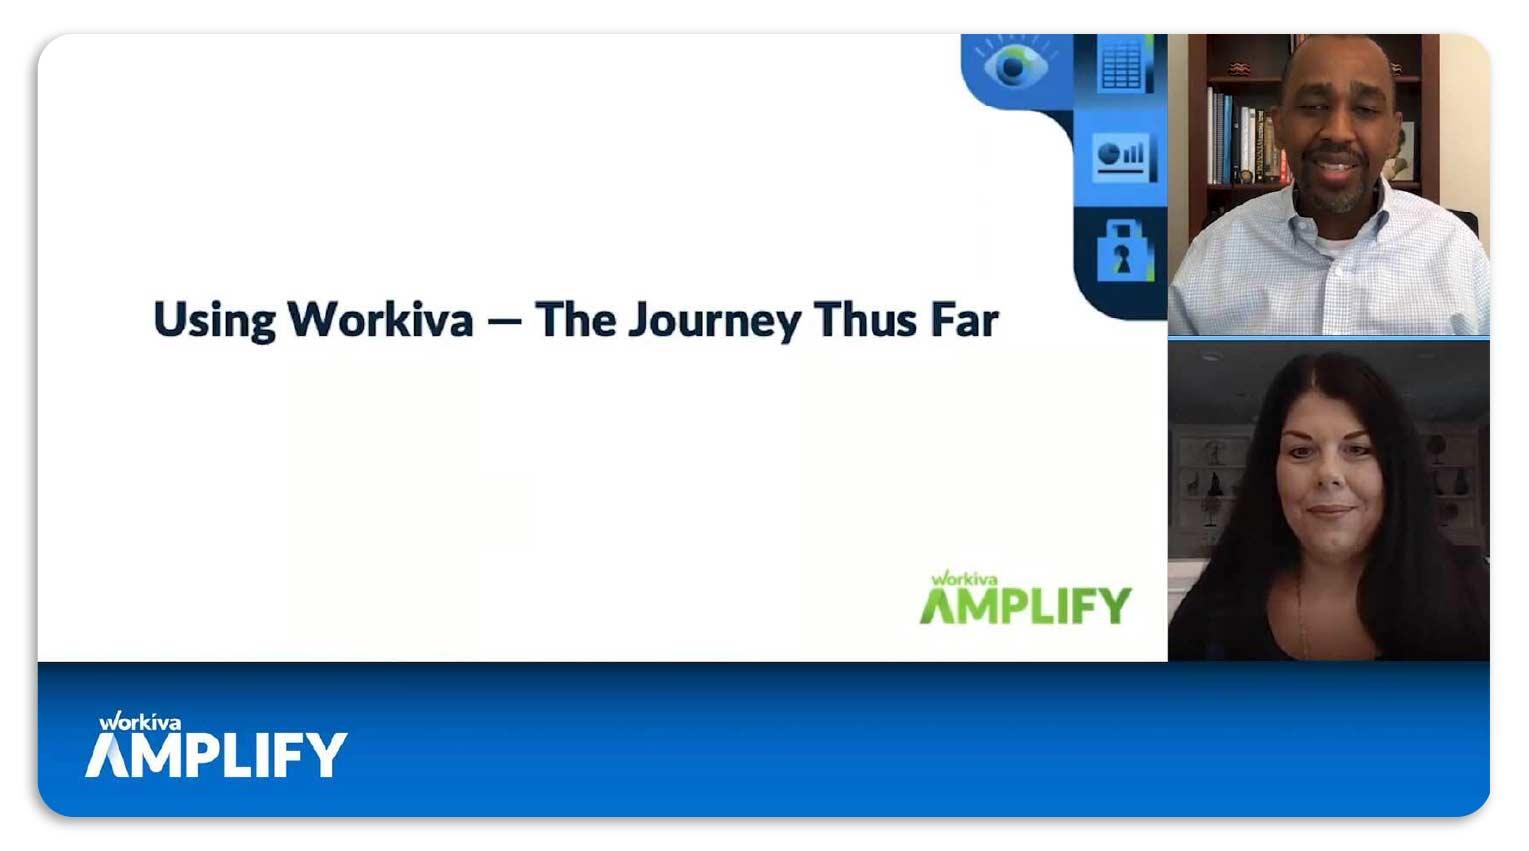 Event presentation slide titled "Using Workiva - The Journey Thus Far"